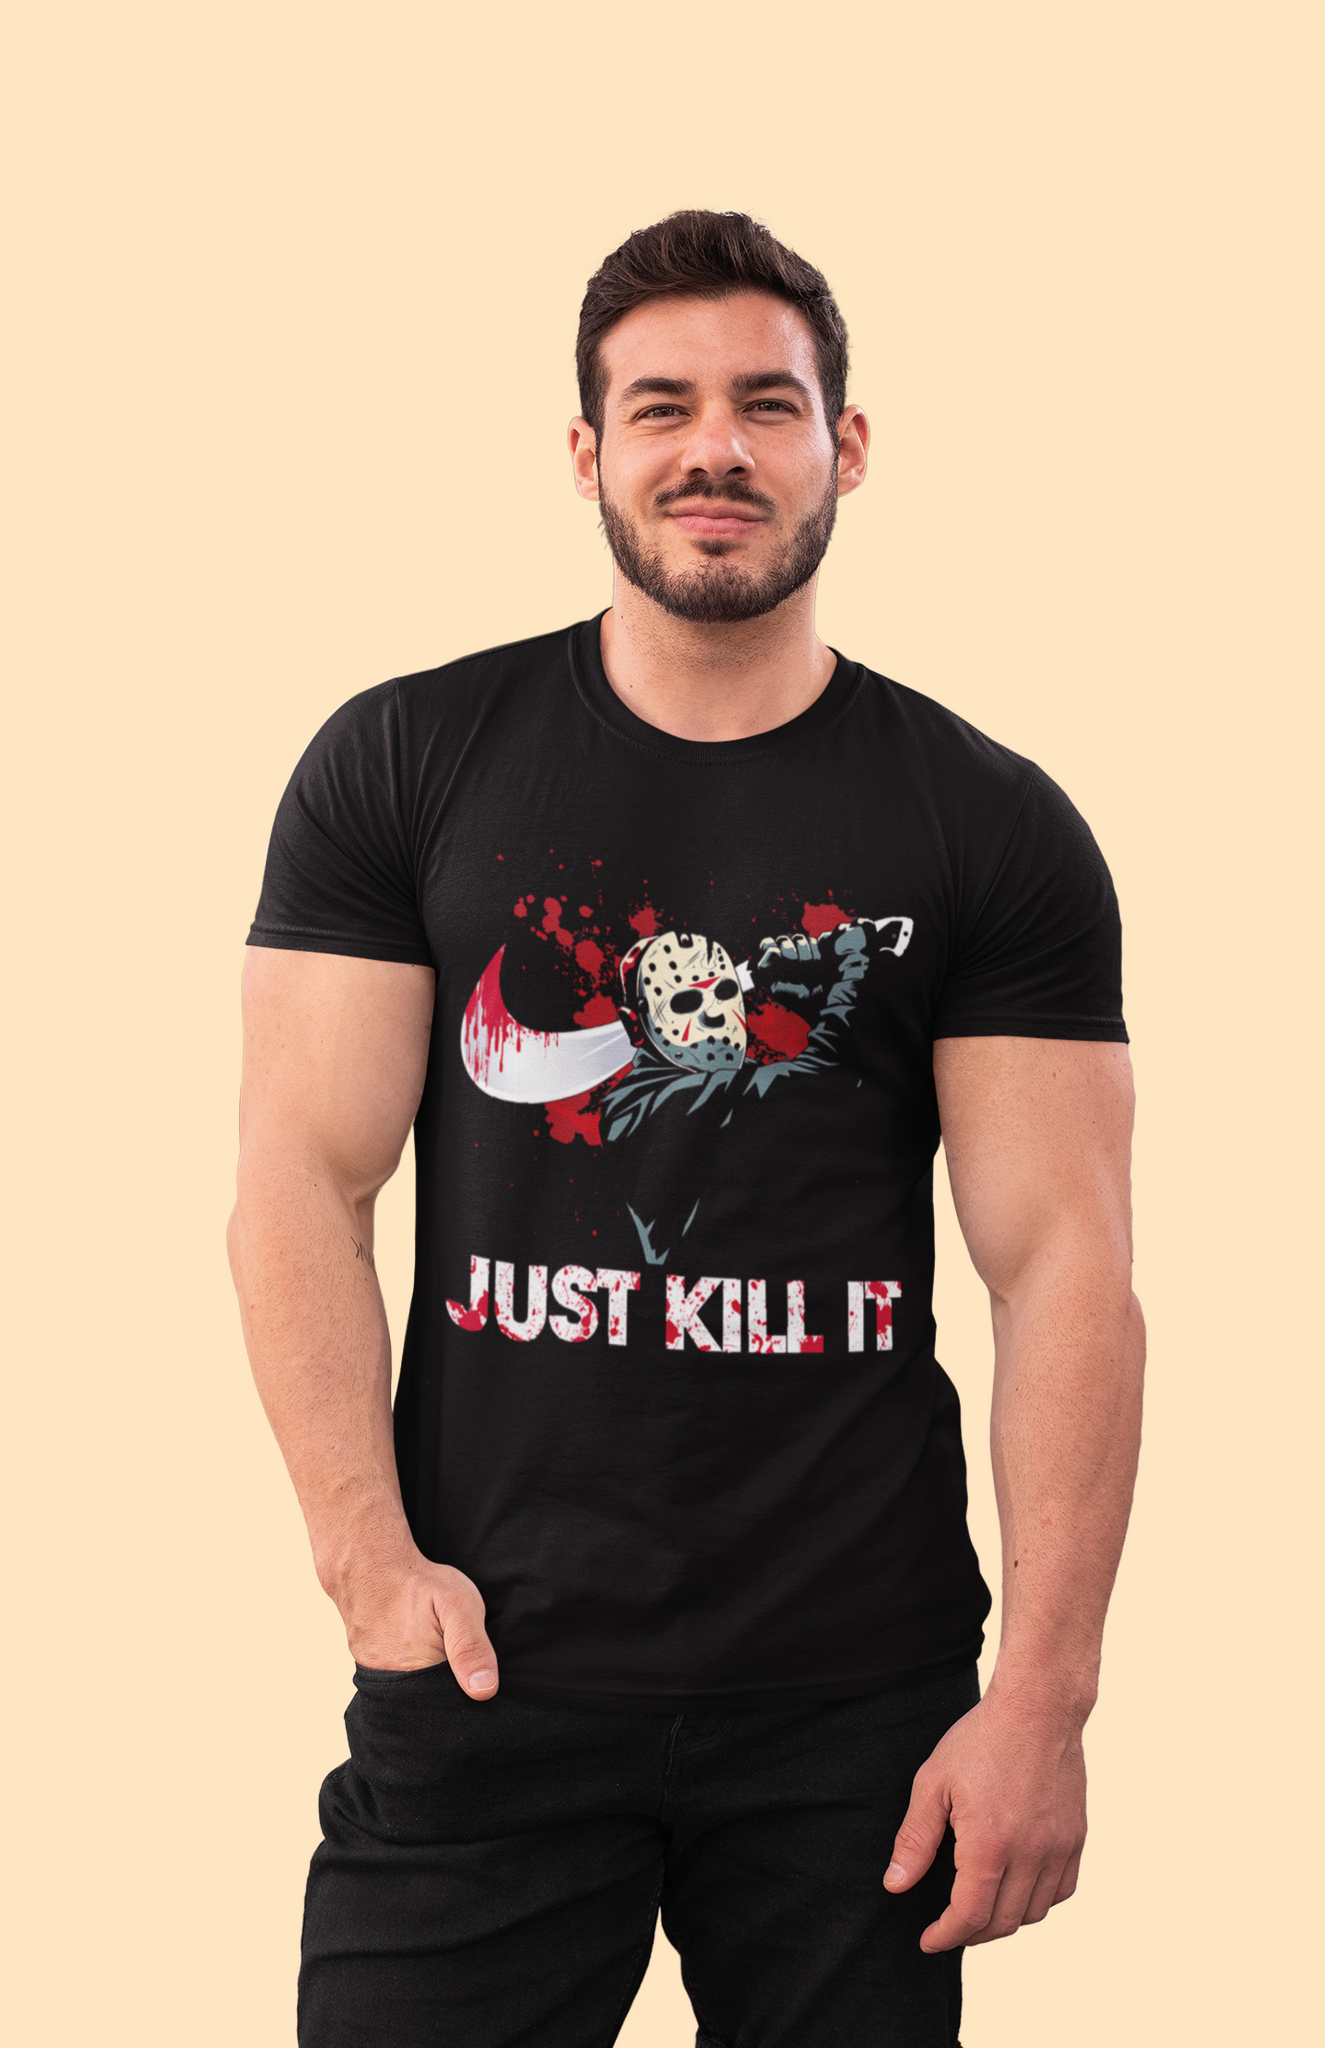 Friday 13th T Shirt, Jason Voorhees T Shirt, Just Kill It Tshirt, Halloween Gifts